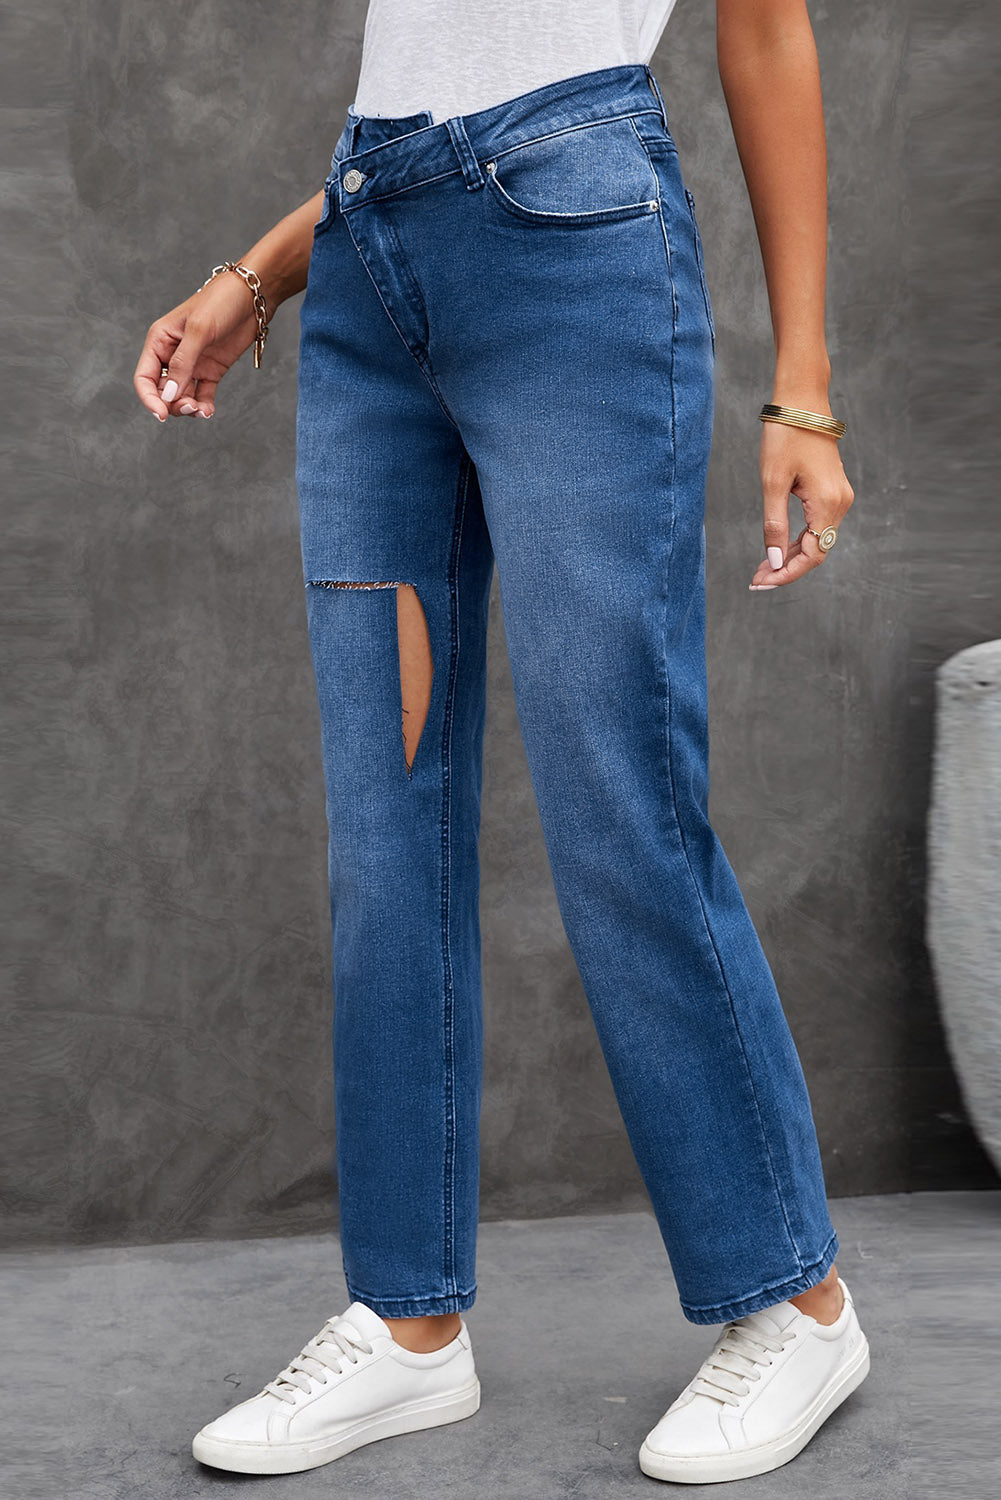 Aryan Asymmetrical High Waist Distressed Jeans